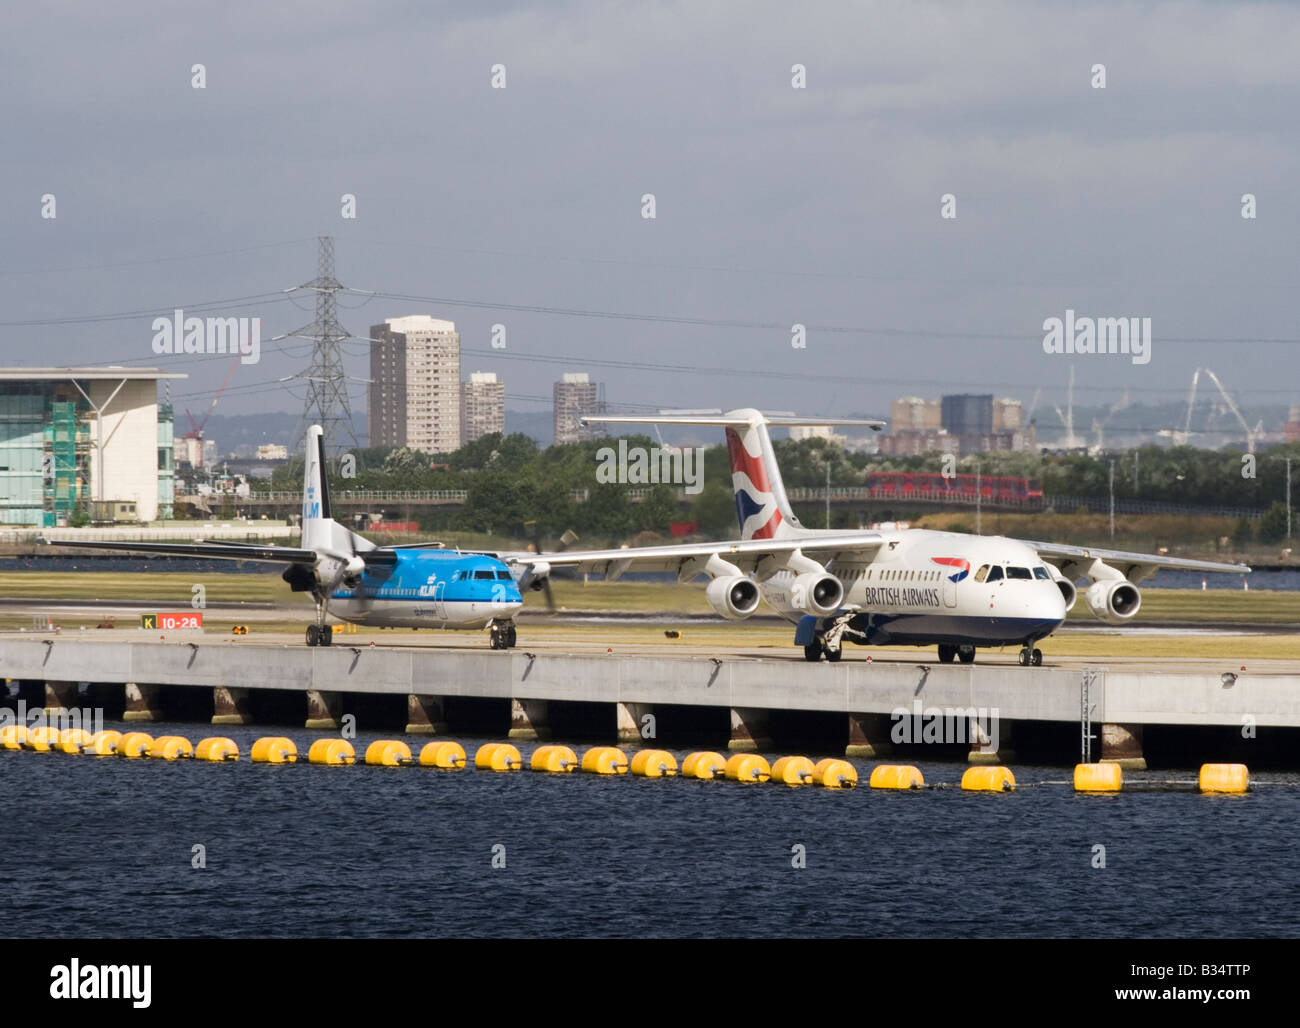 Two aircraft at London City Airport Stock Photo